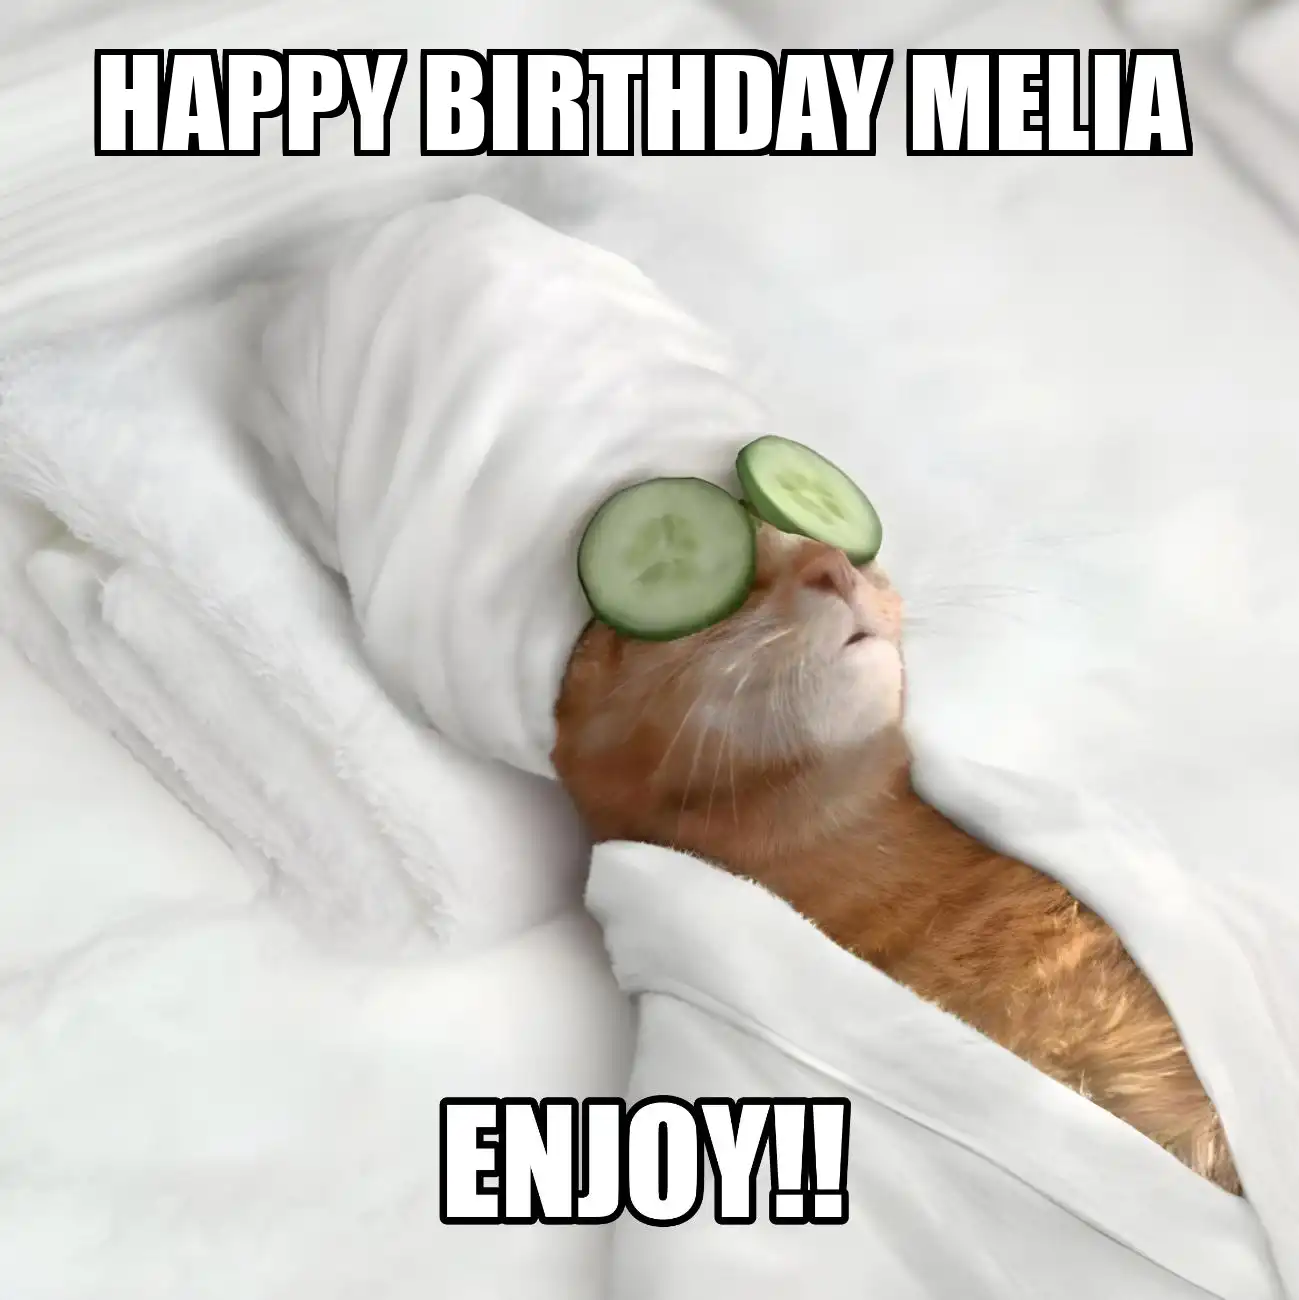 Happy Birthday Melia Enjoy Cat Meme